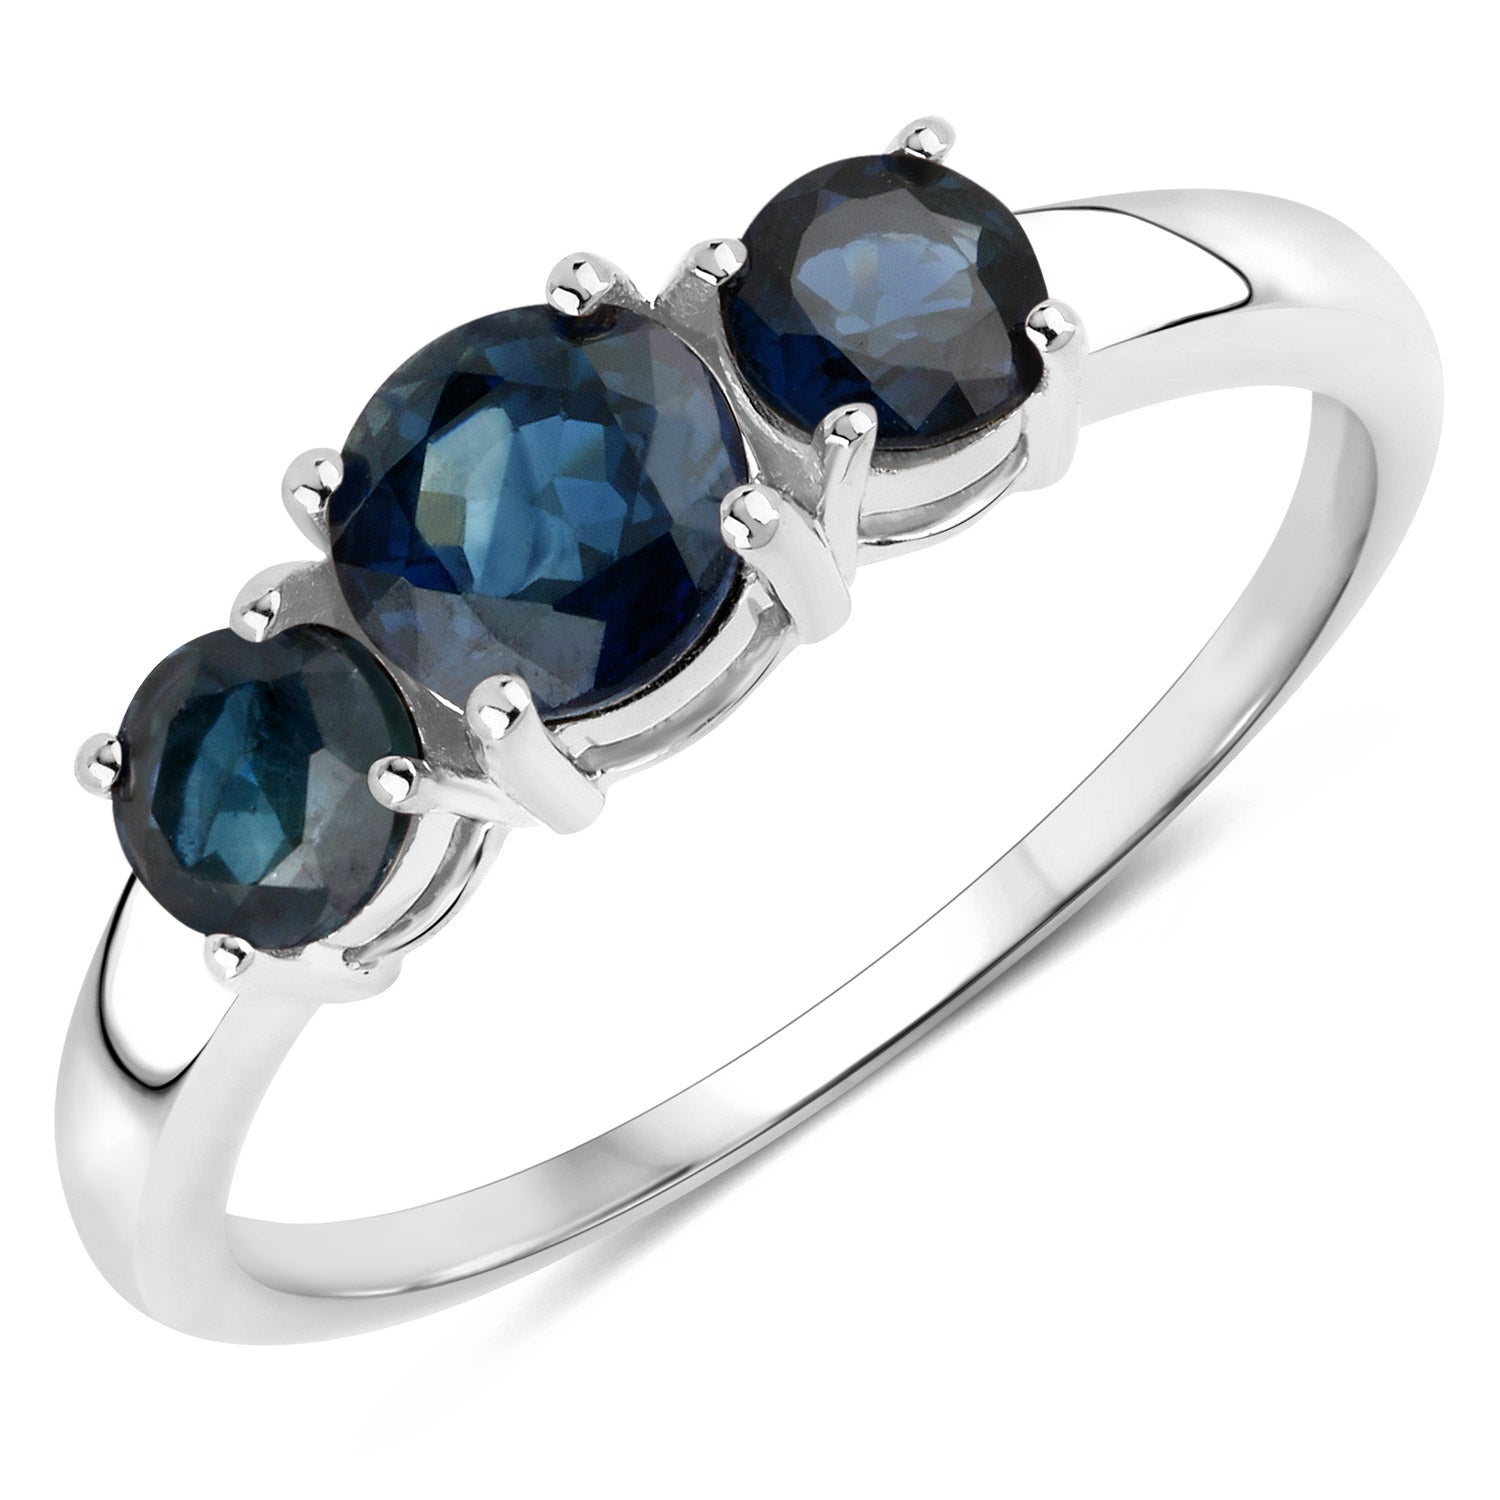 1.25 Carat Genuine Blue Sapphire 14K White Gold Ring